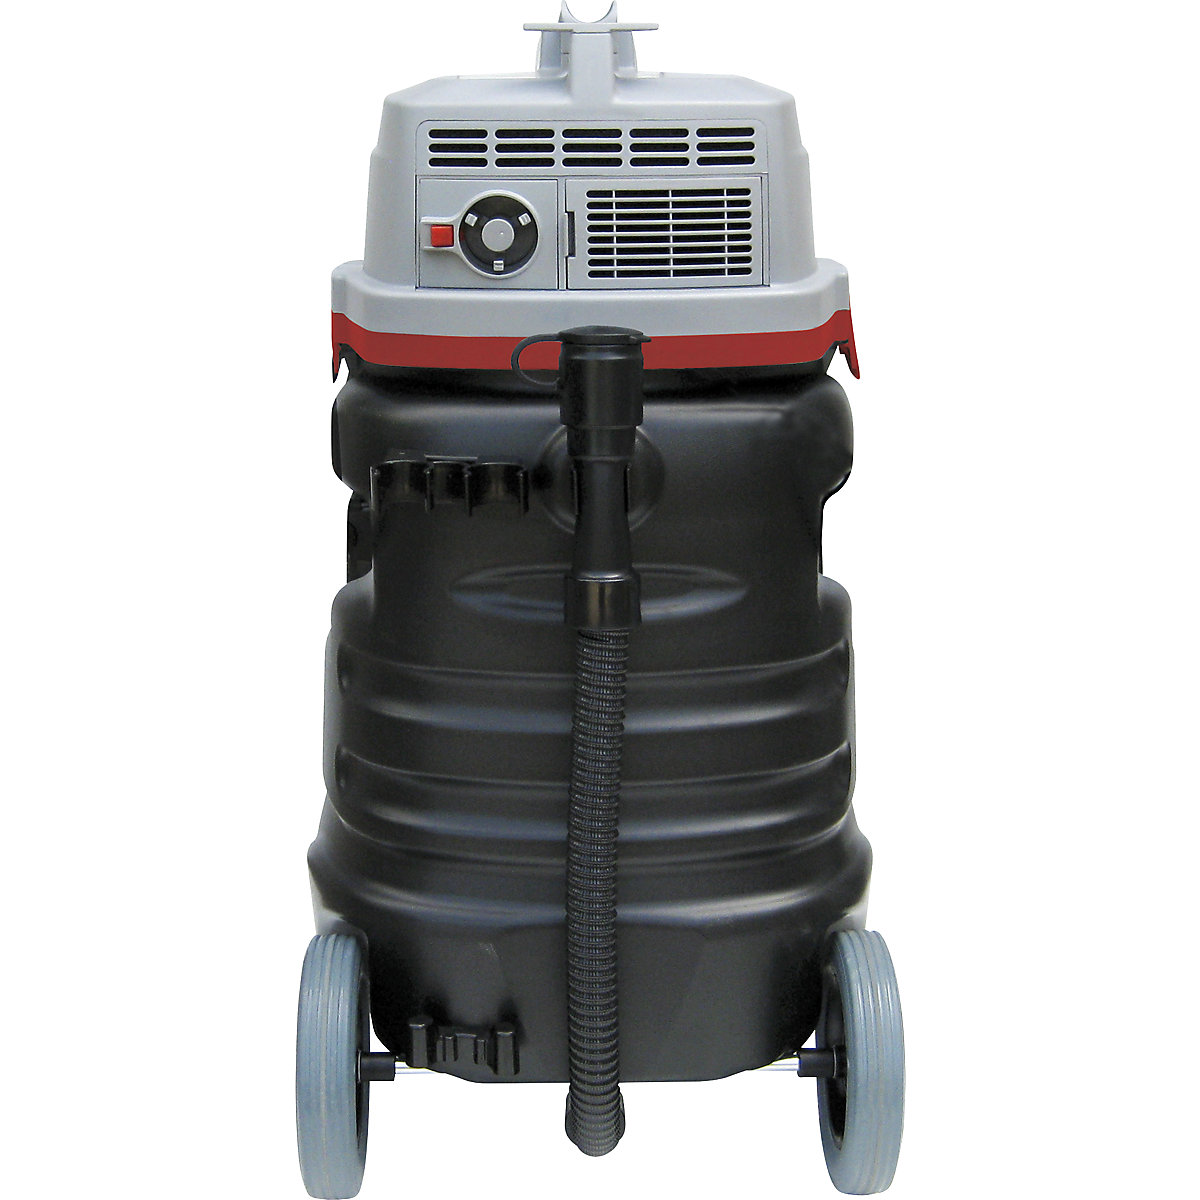 Sprintus – Wet and dry vacuum cleaner